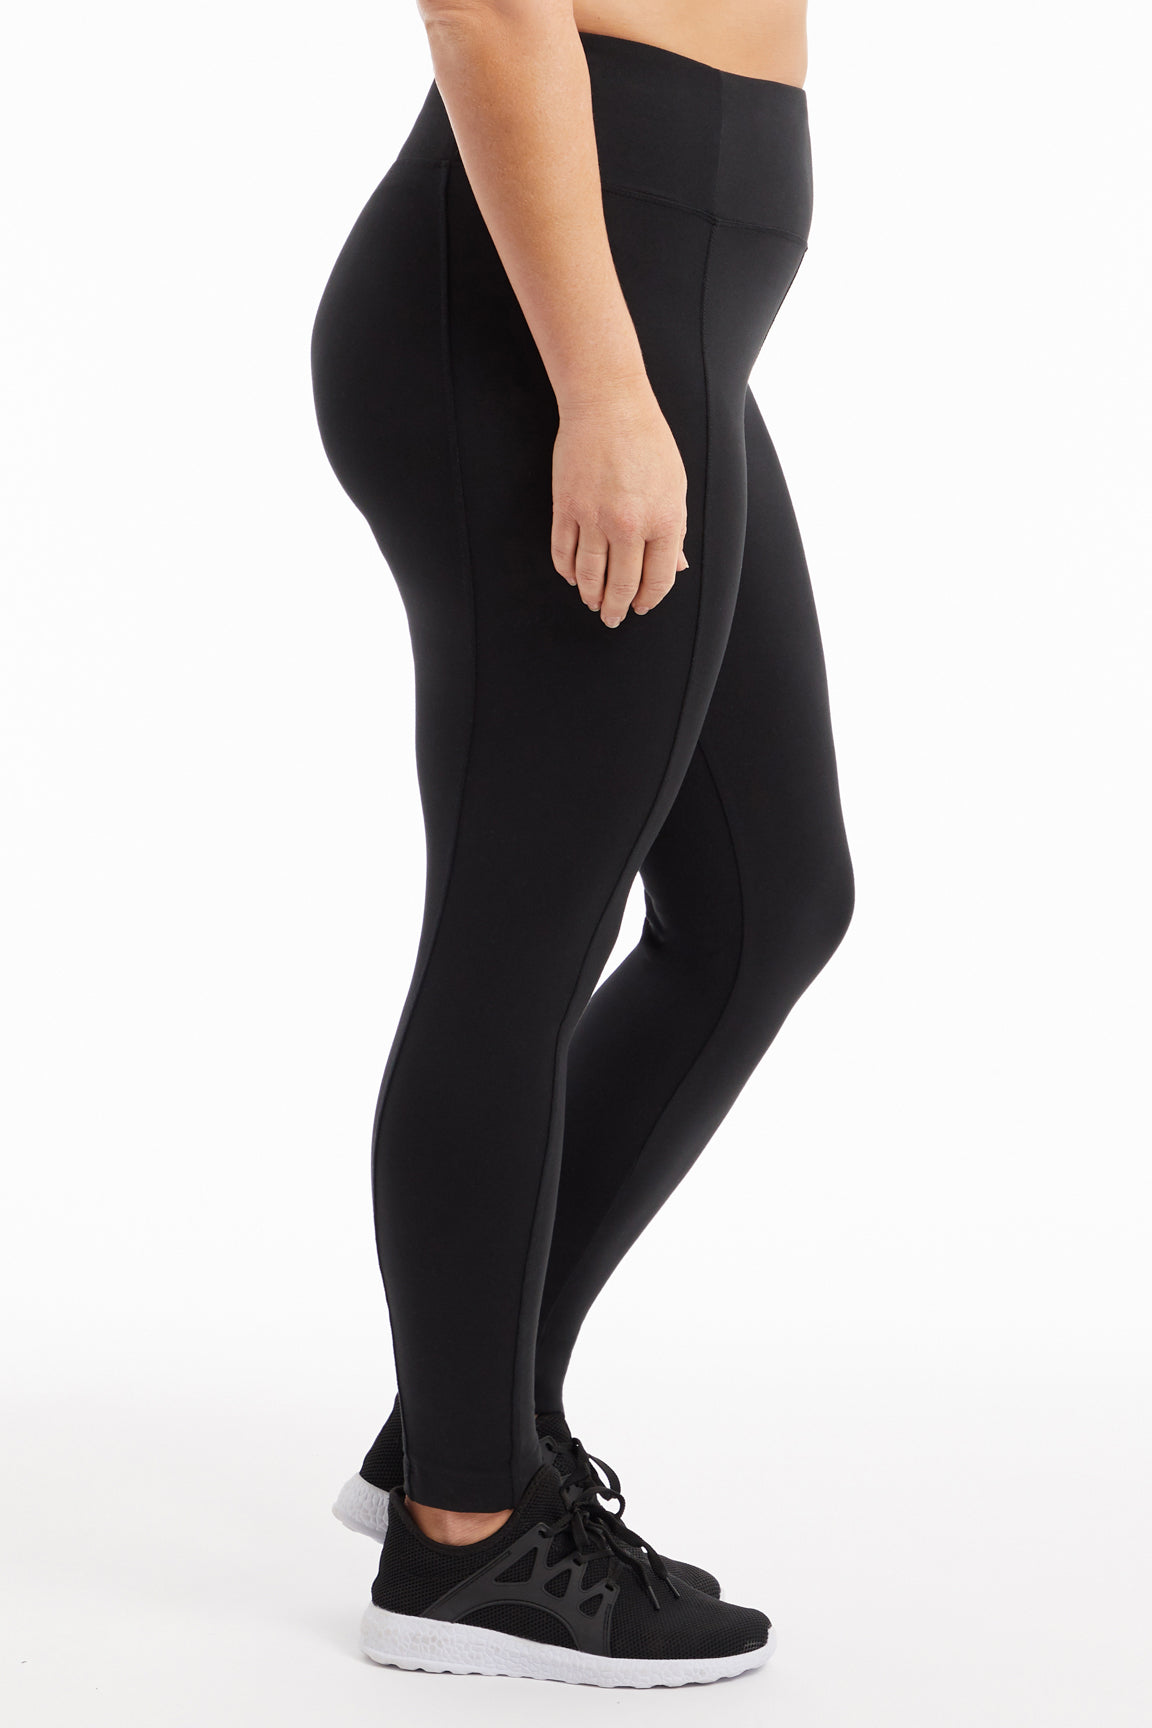 Plain Female Yoga Leggings Pants, Waist Size: 34, Model Name